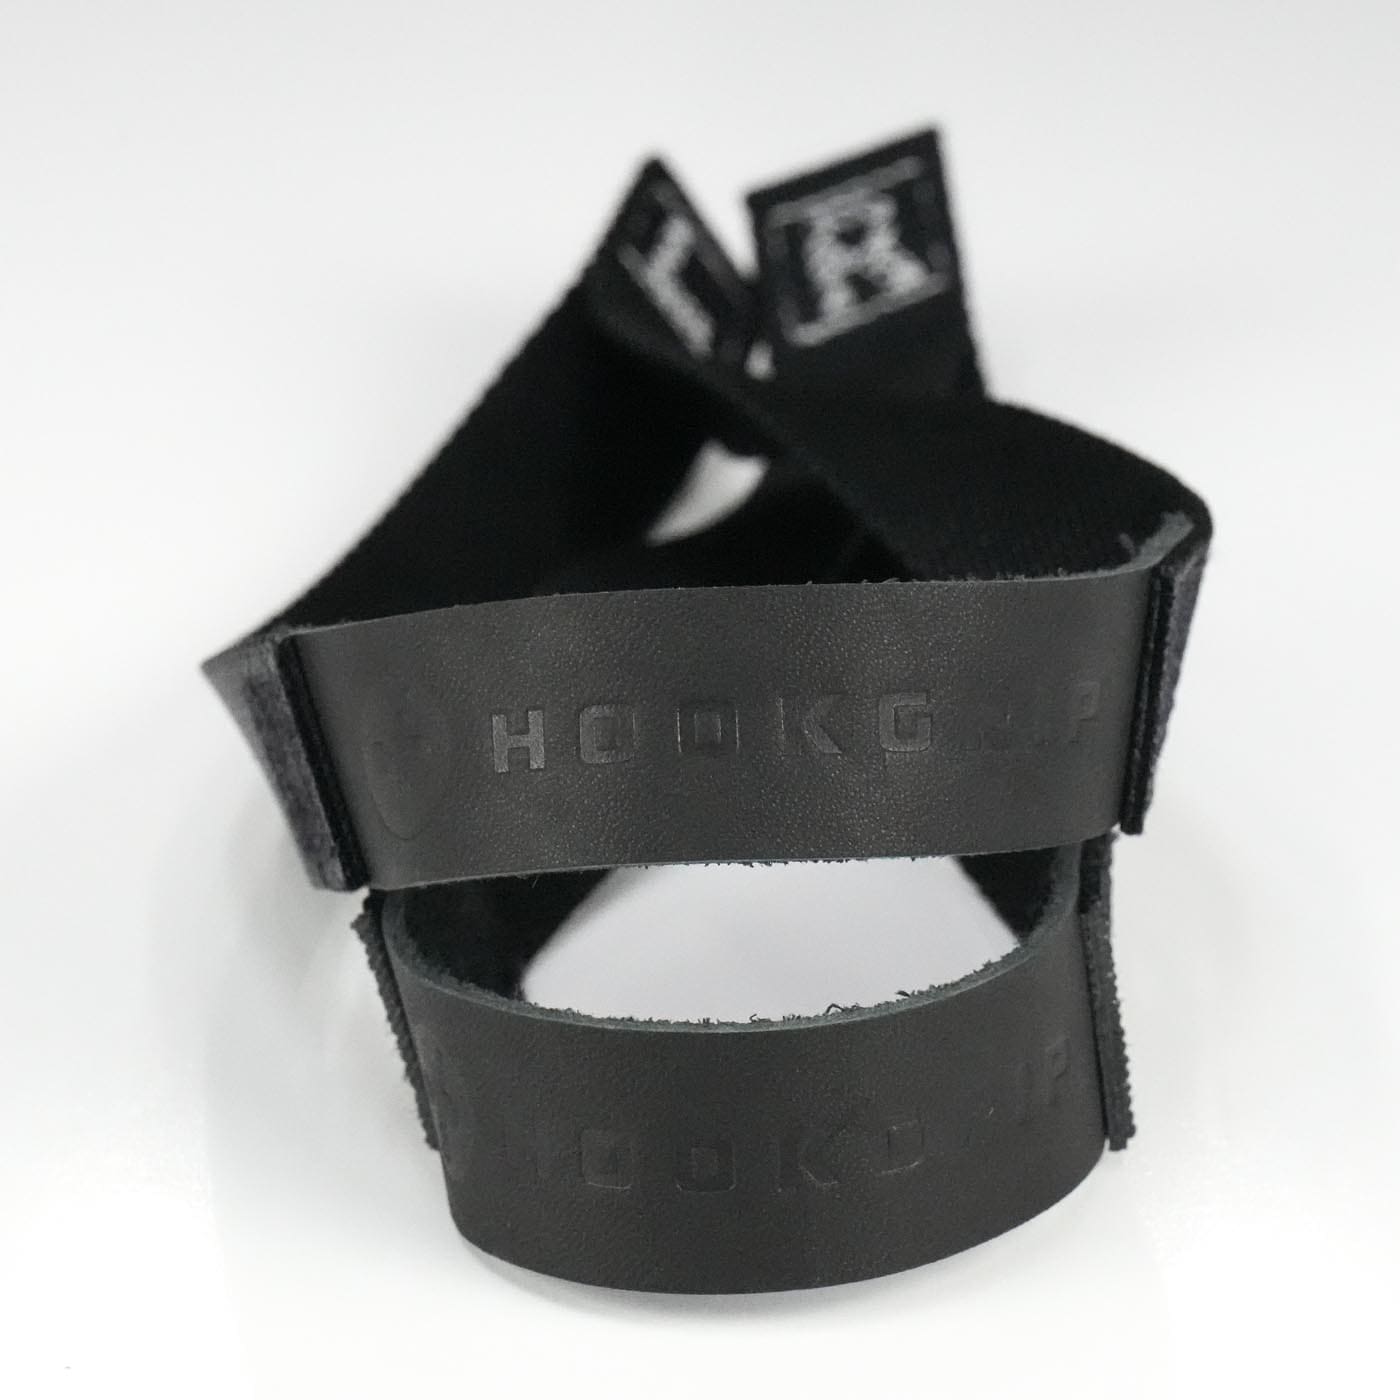 Leather/Nylon Black hookgrip weightlifting straps